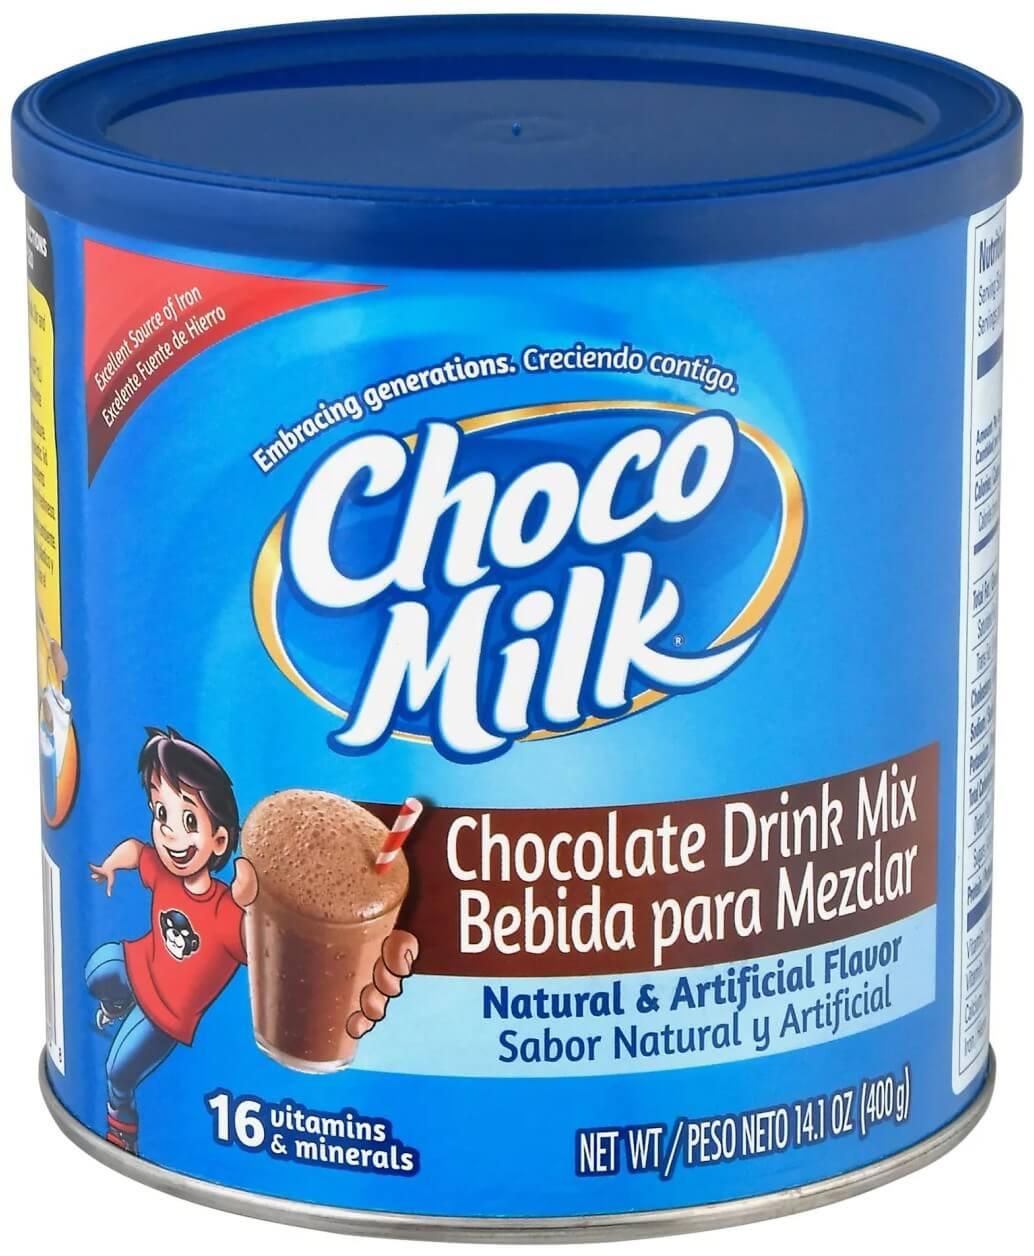 Choco Milk - Chocolate Drink Mix, Chocolate Flavor 14.1 oz